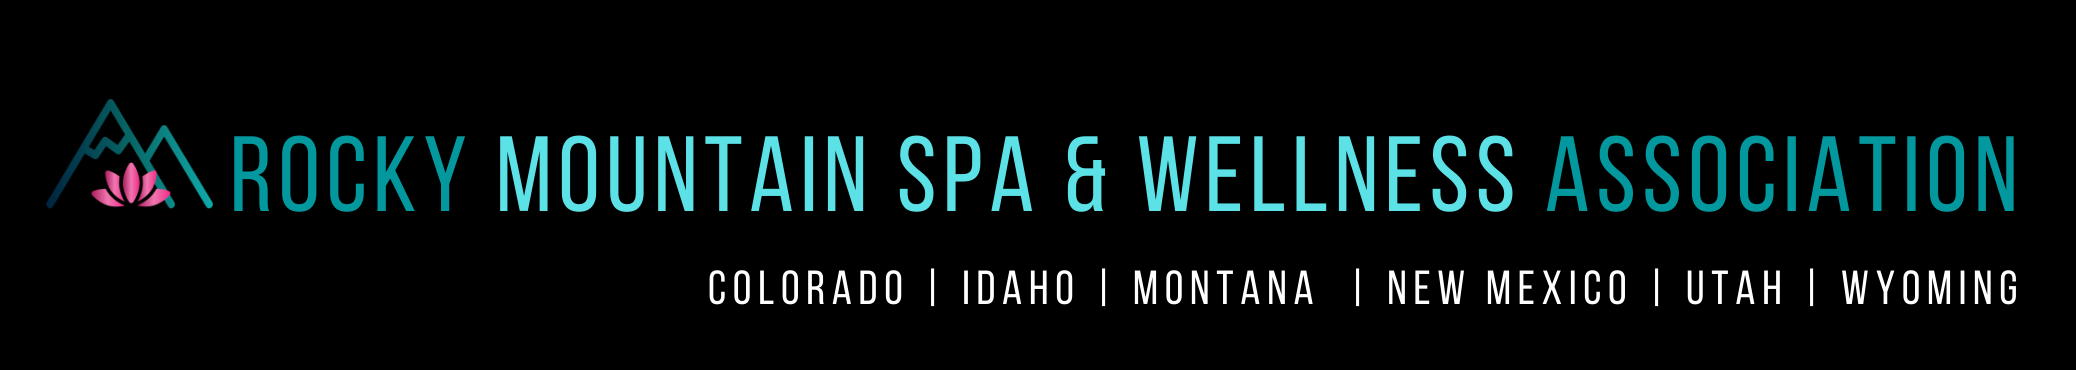 Rocky Mountain Spa & Wellness Association